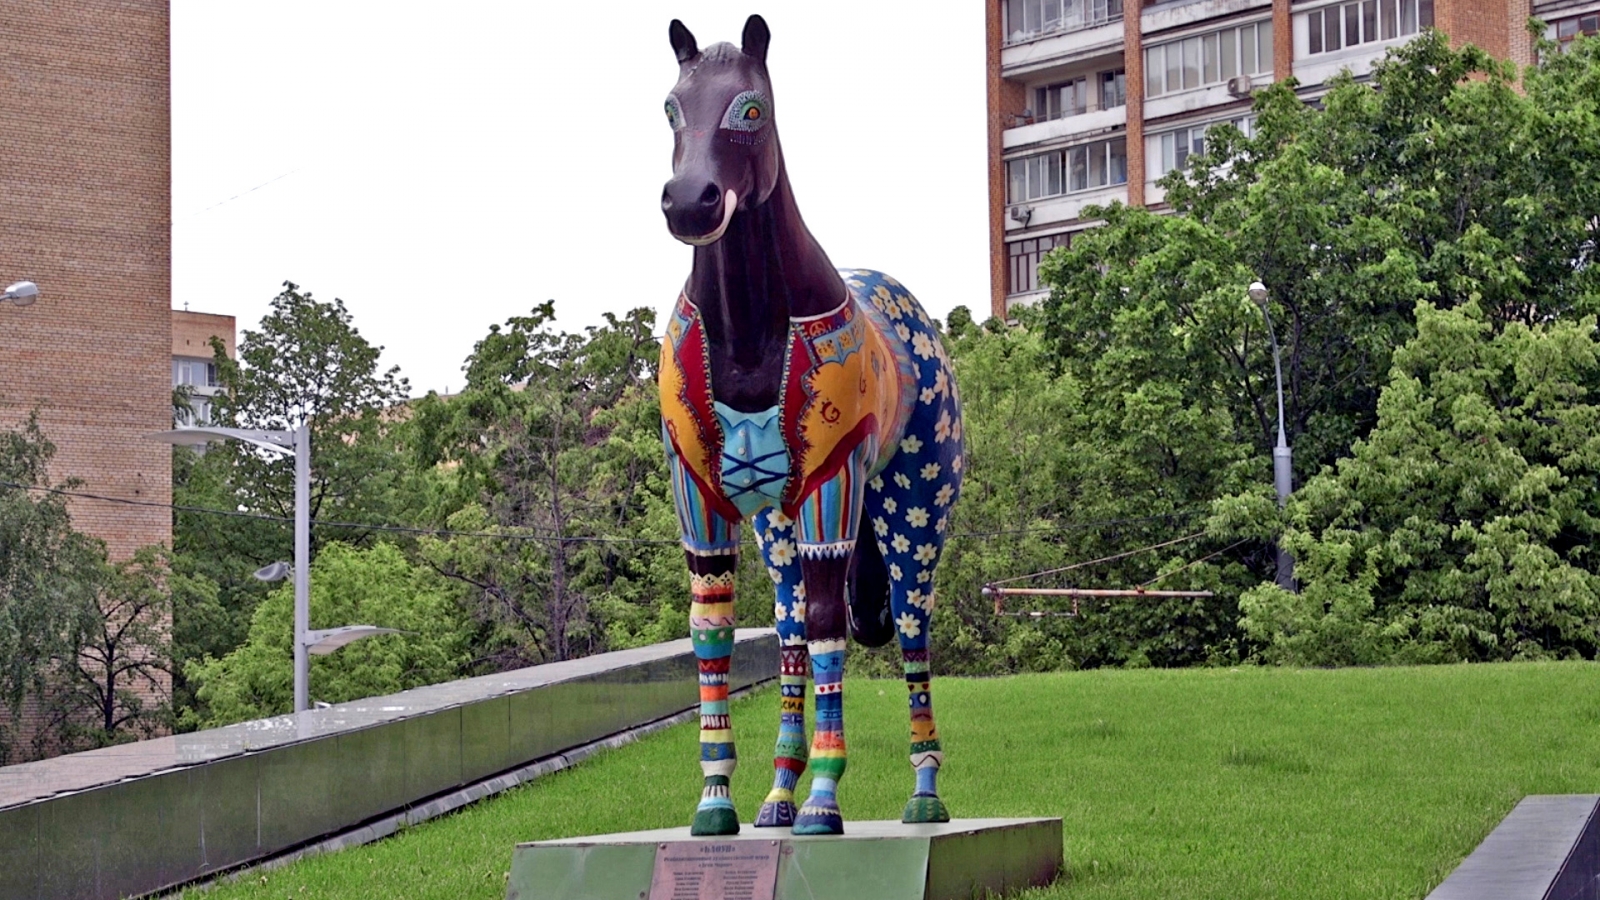 A horse sculpture outside Yandex headquarters